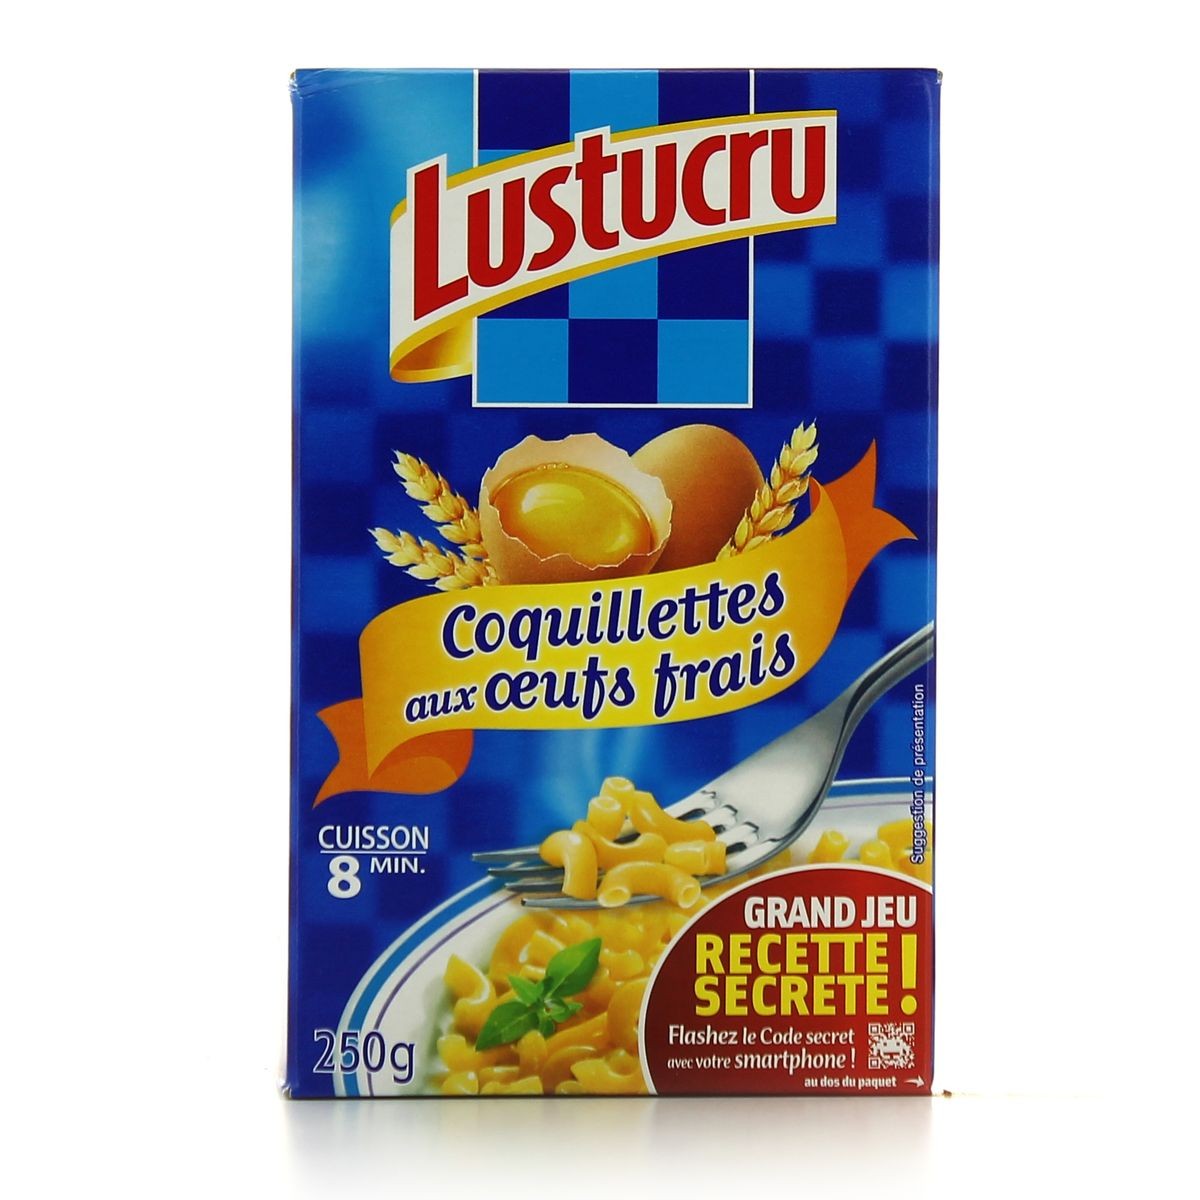 Lustucru fresh egg shells 250g